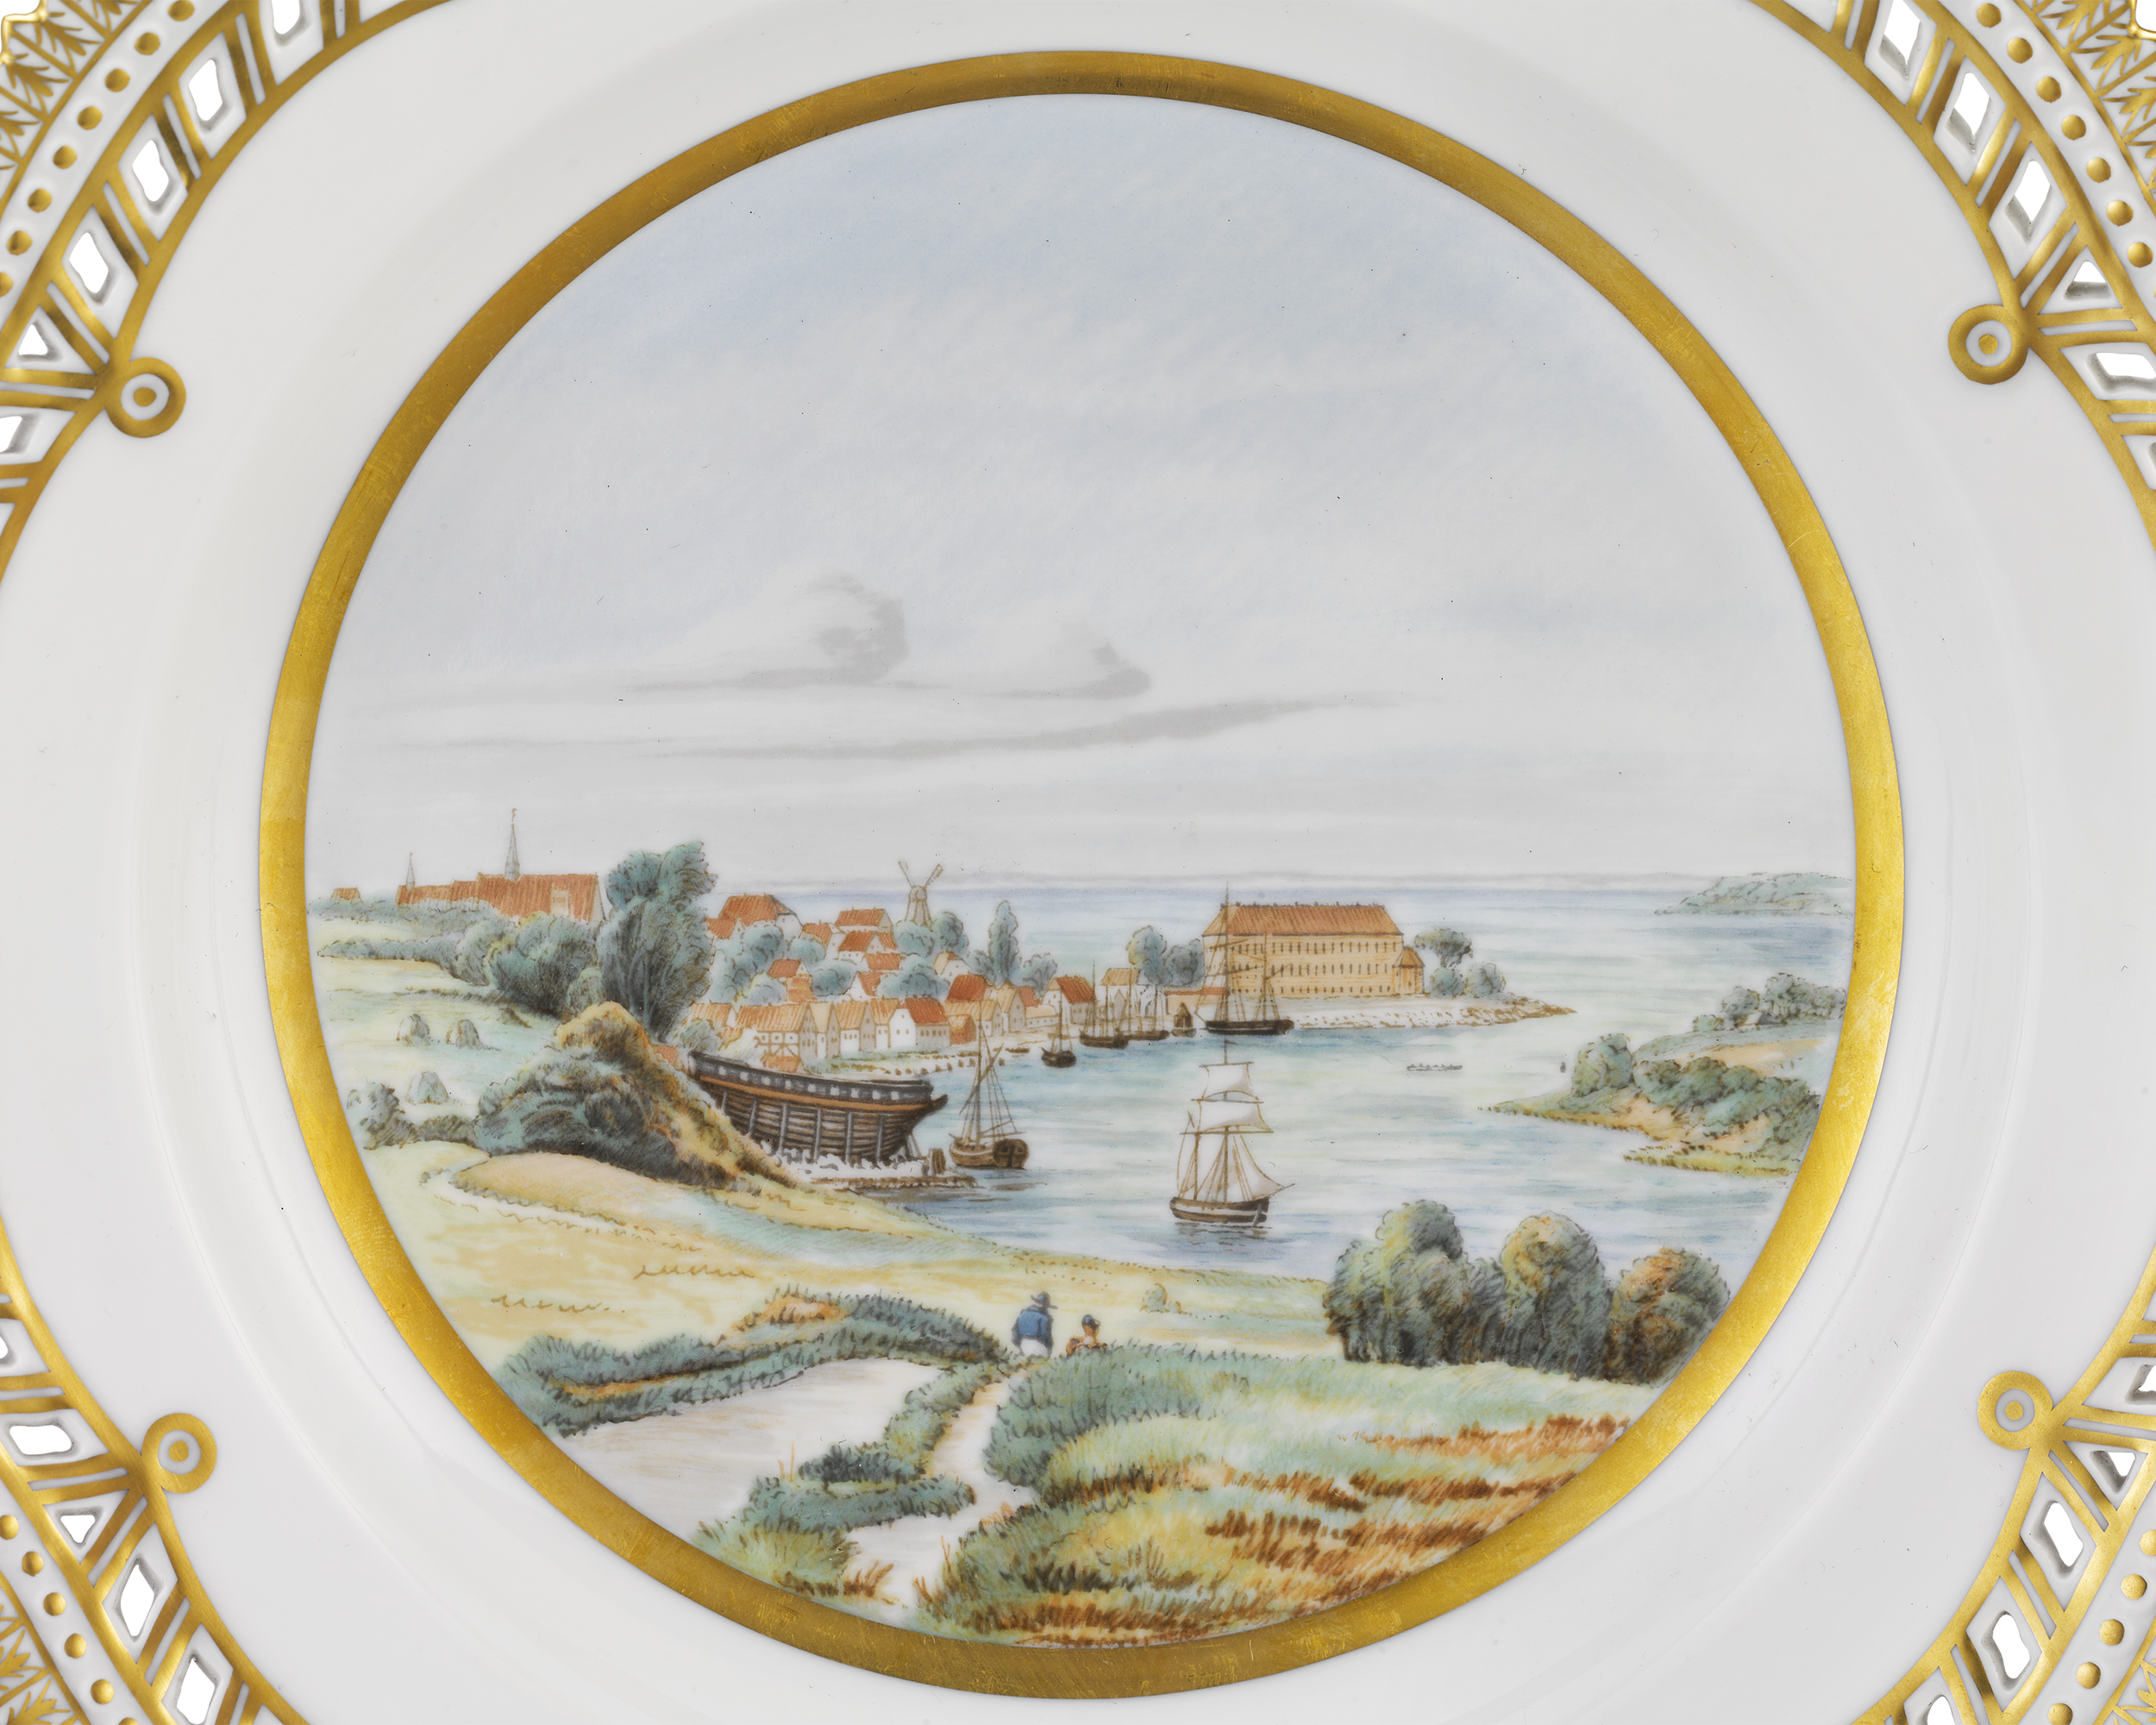 Sonderborg Castle Porcelain Plate by Royal Copenhagen